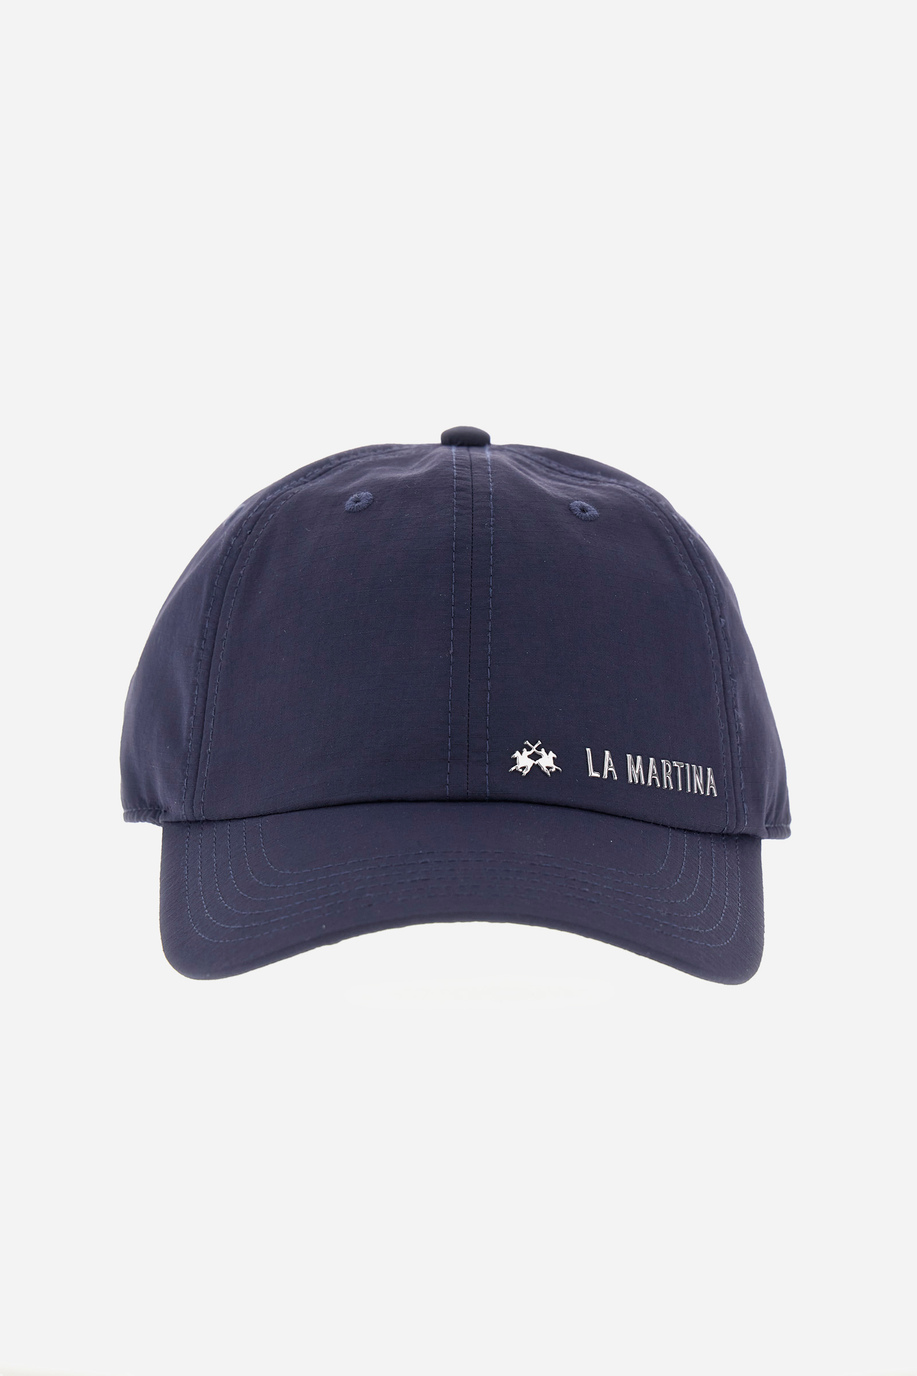 Baseball cap in synthetic fabric - Yucatan - Hats | La Martina - Official Online Shop